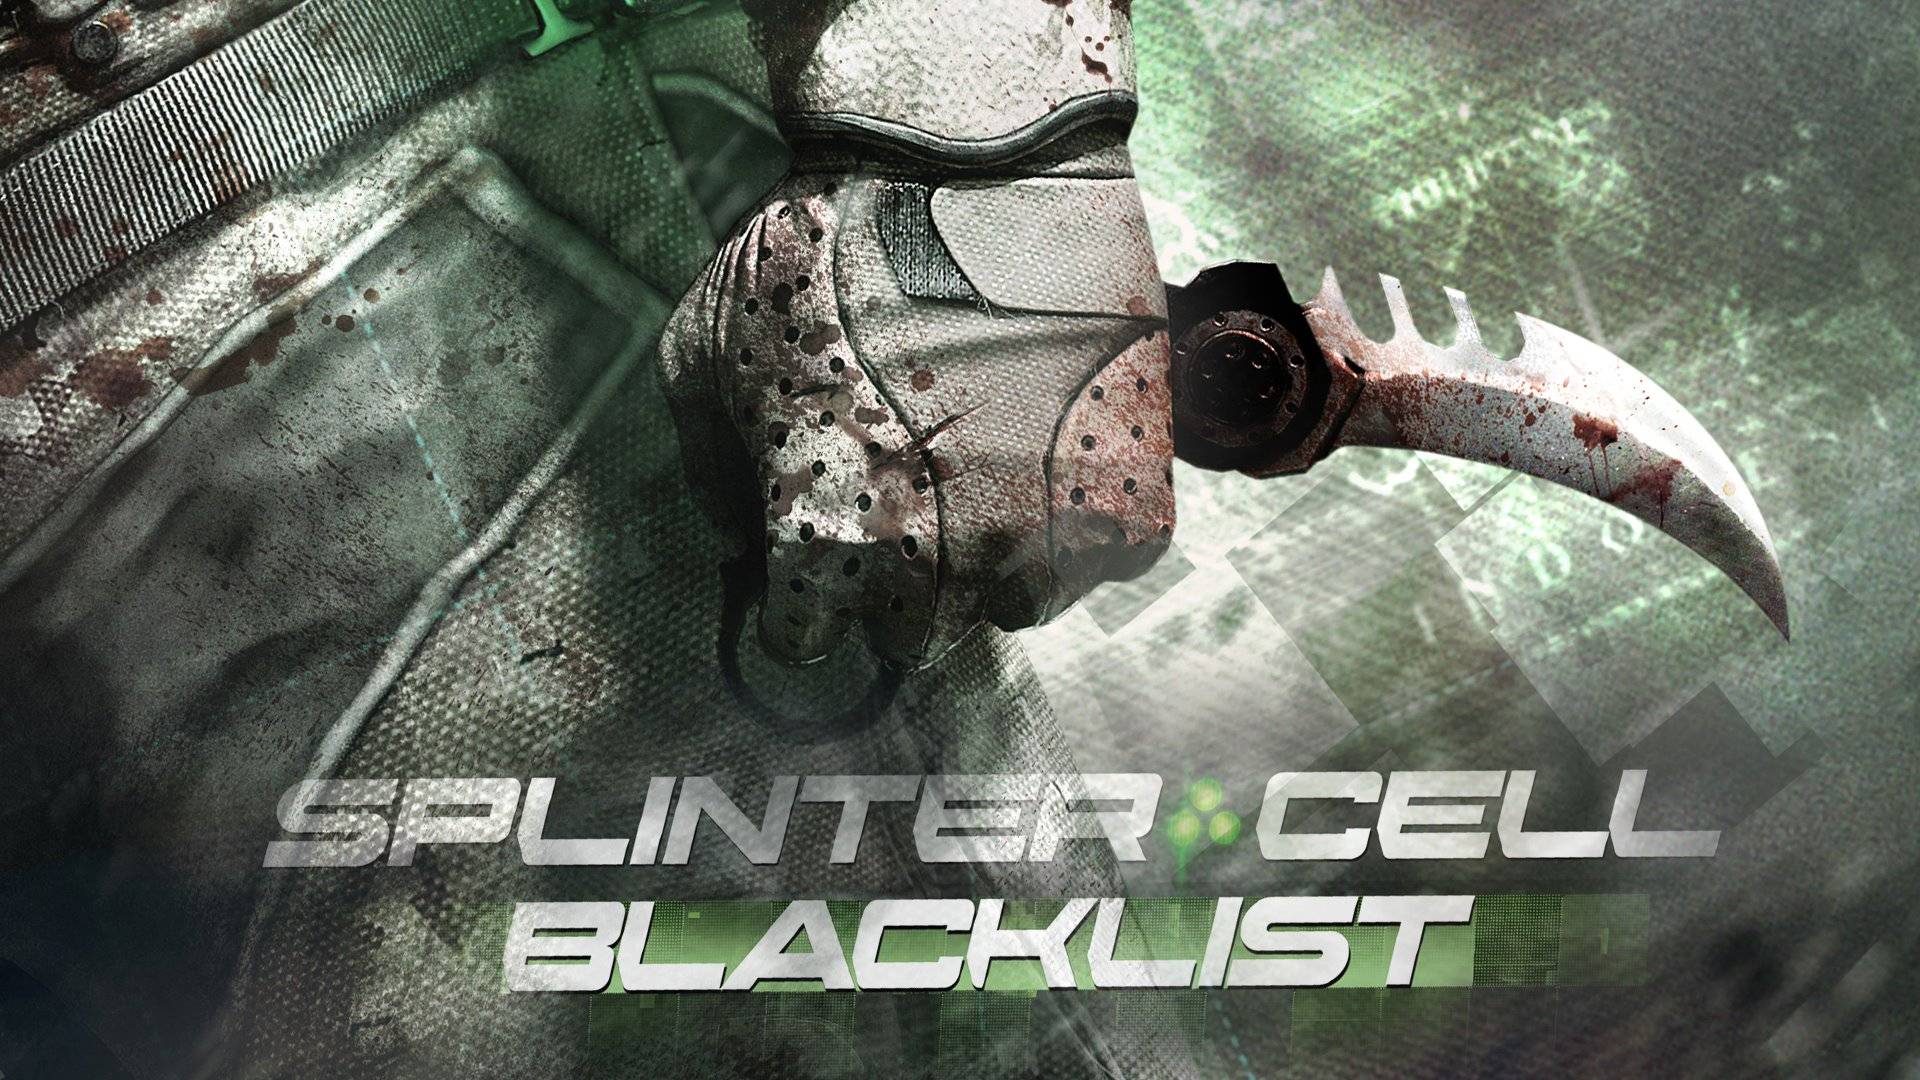 Tom Clancys Splinter Cell Blacklist Uplay Key GLOBAL